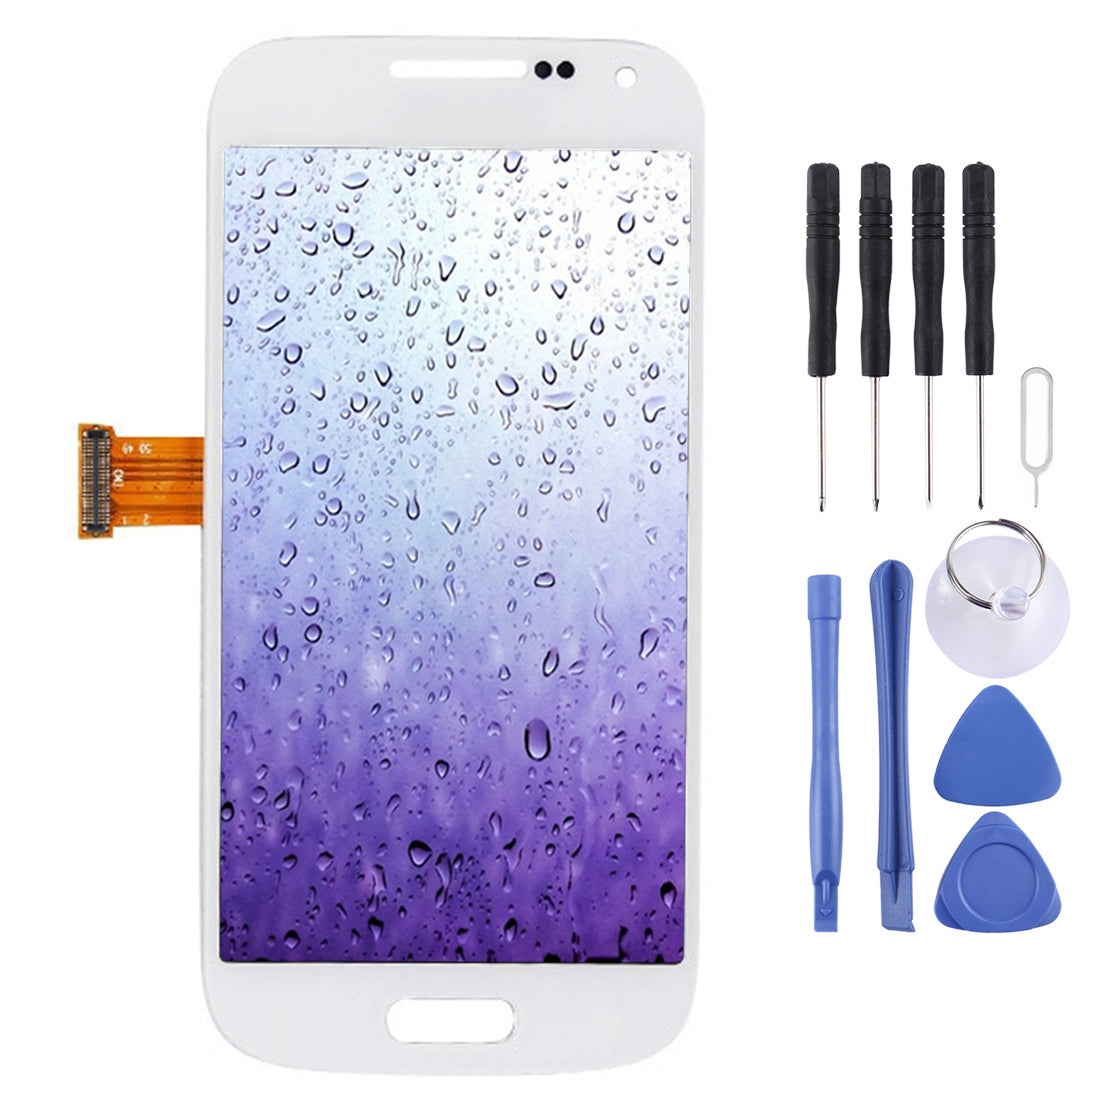 LCD Screen + Touch Digitizer Samsung Galaxy S4 Mini i9195 i9190 White